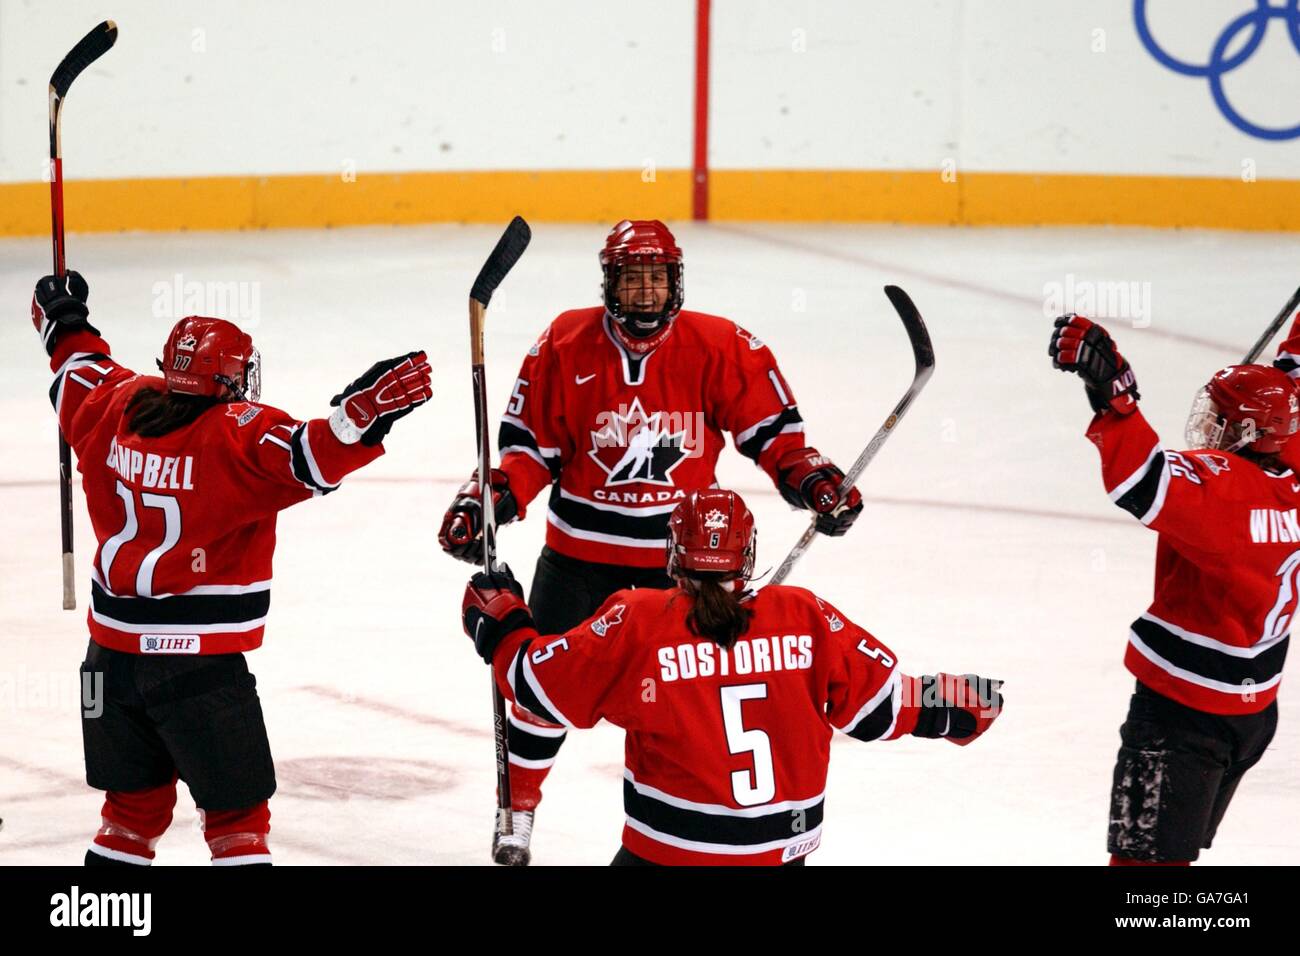 Canada's Danielle Goyette (c) celebrates scoring with teammates Stock Photo